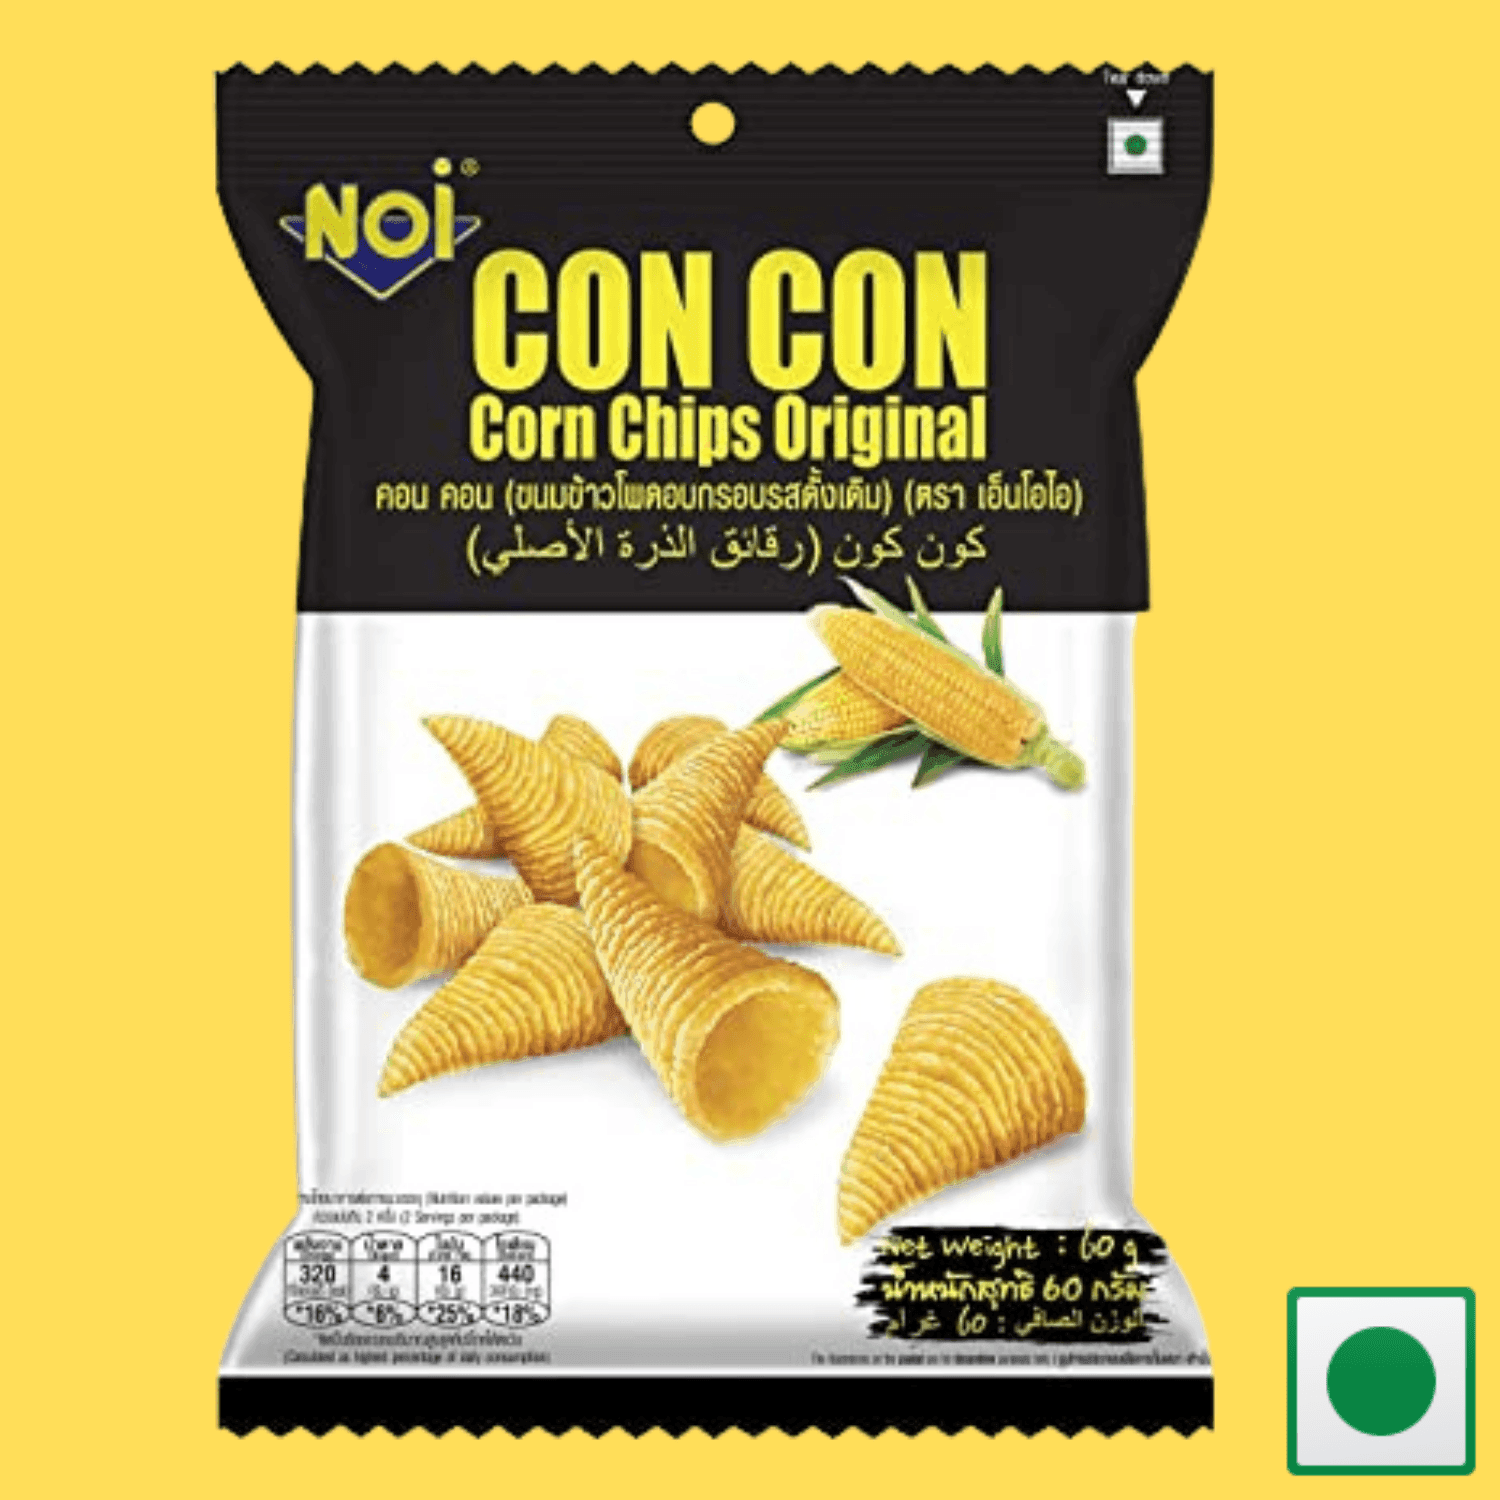 NOI Corn Chips Original 60g (IMPORTED) - Super 7 Mart